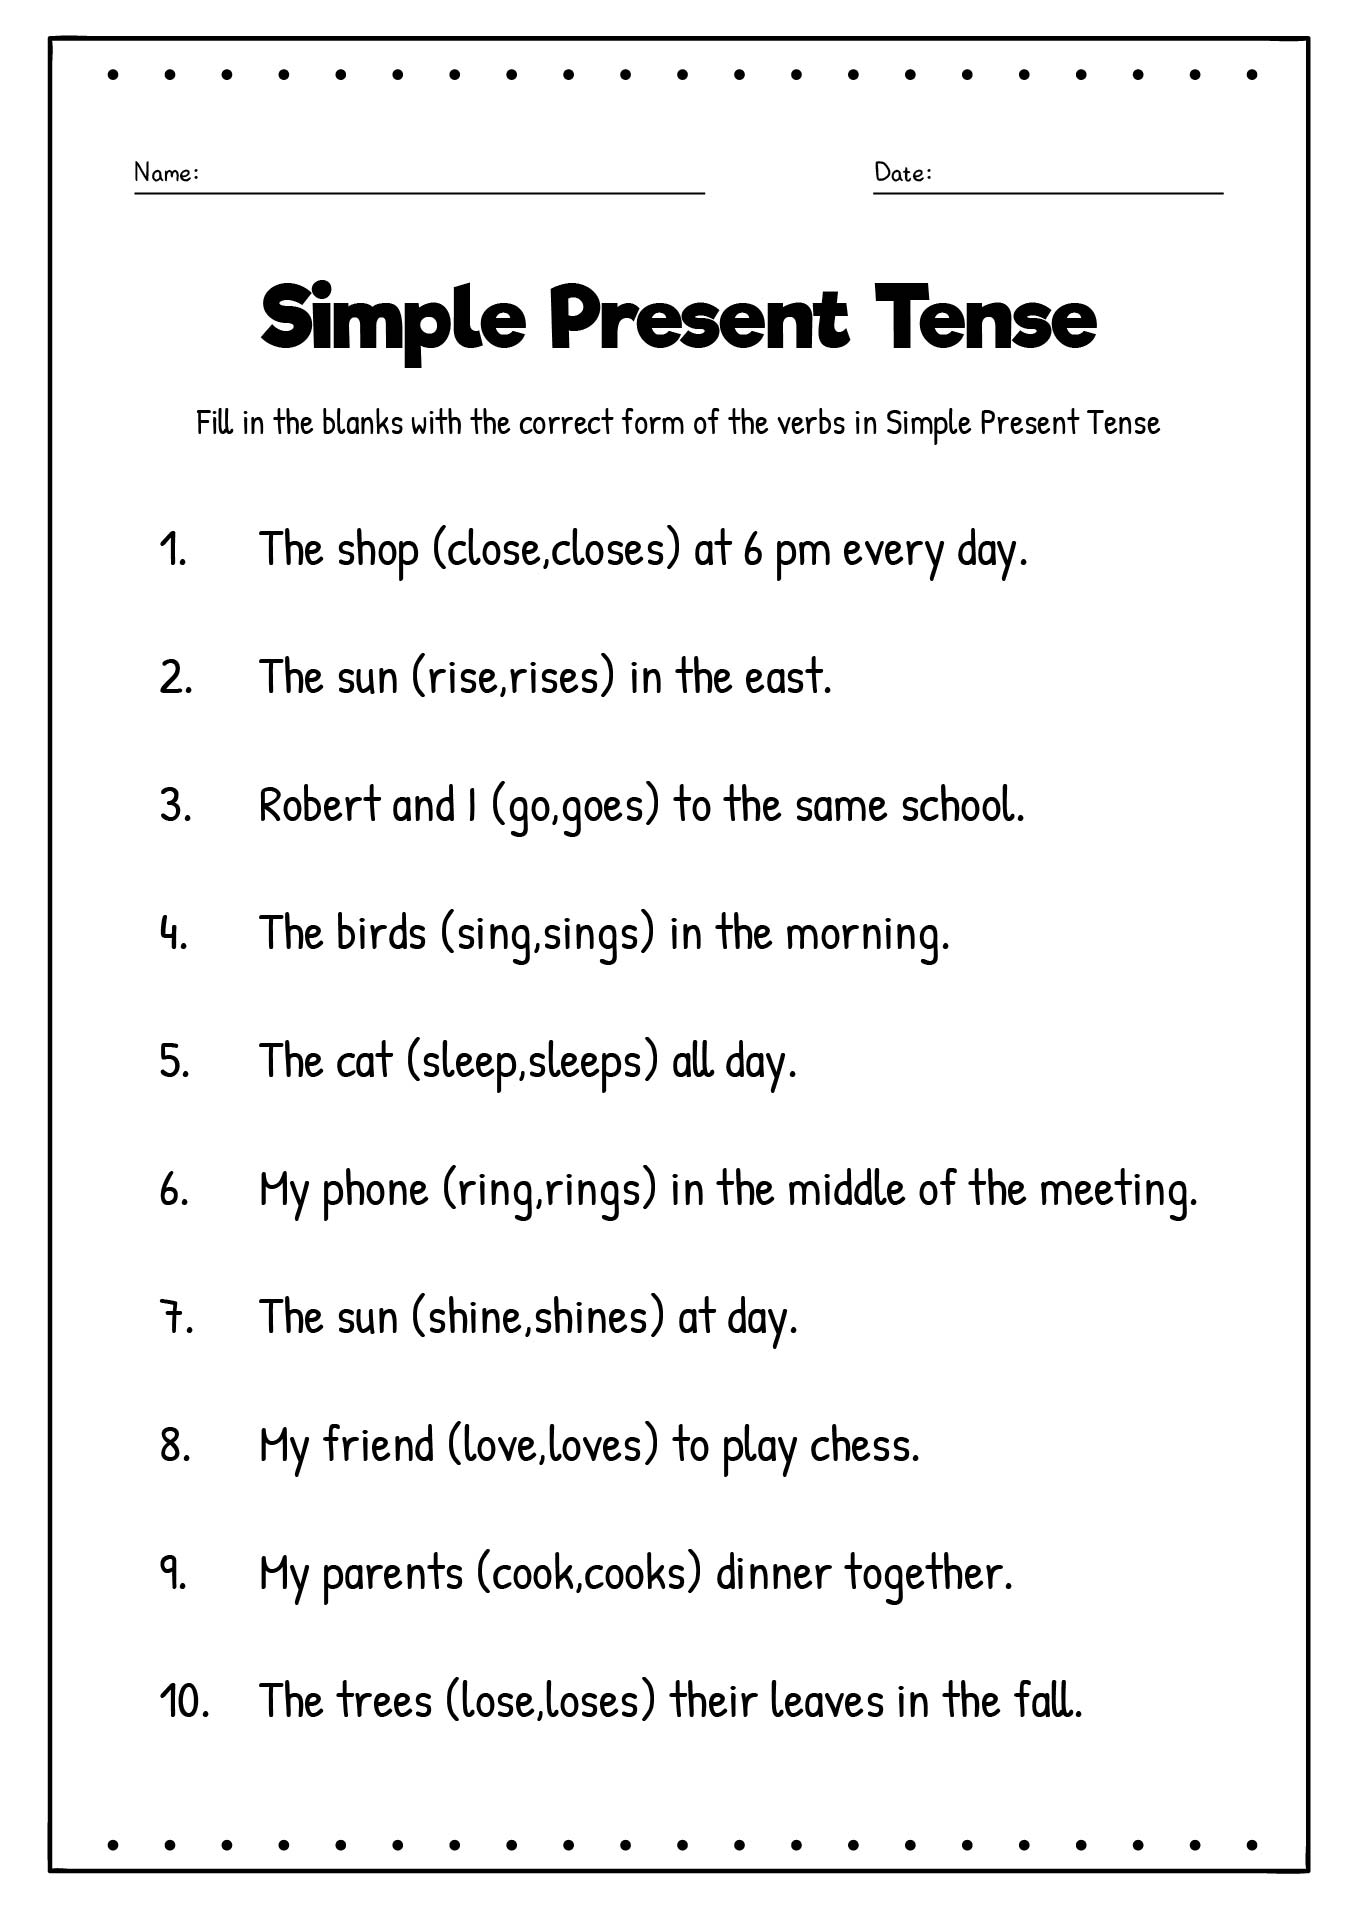 present-simple-tense-part-1-grammar-explanation-2-pages-esl-worksheet-by-zsuzsapszi